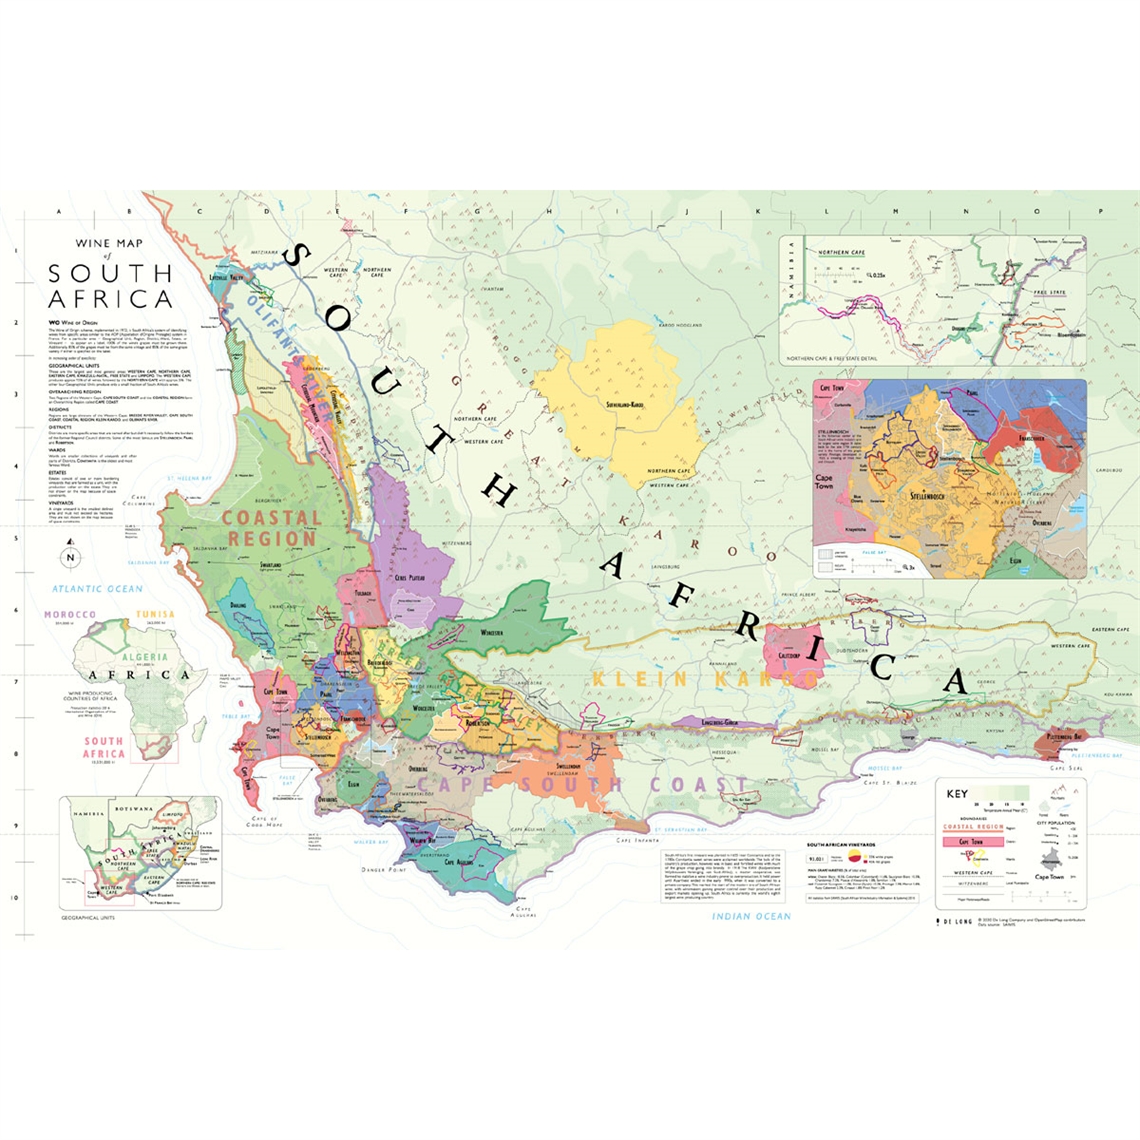 De Long’s Wine Map of South Africa - Bookshelf Edition